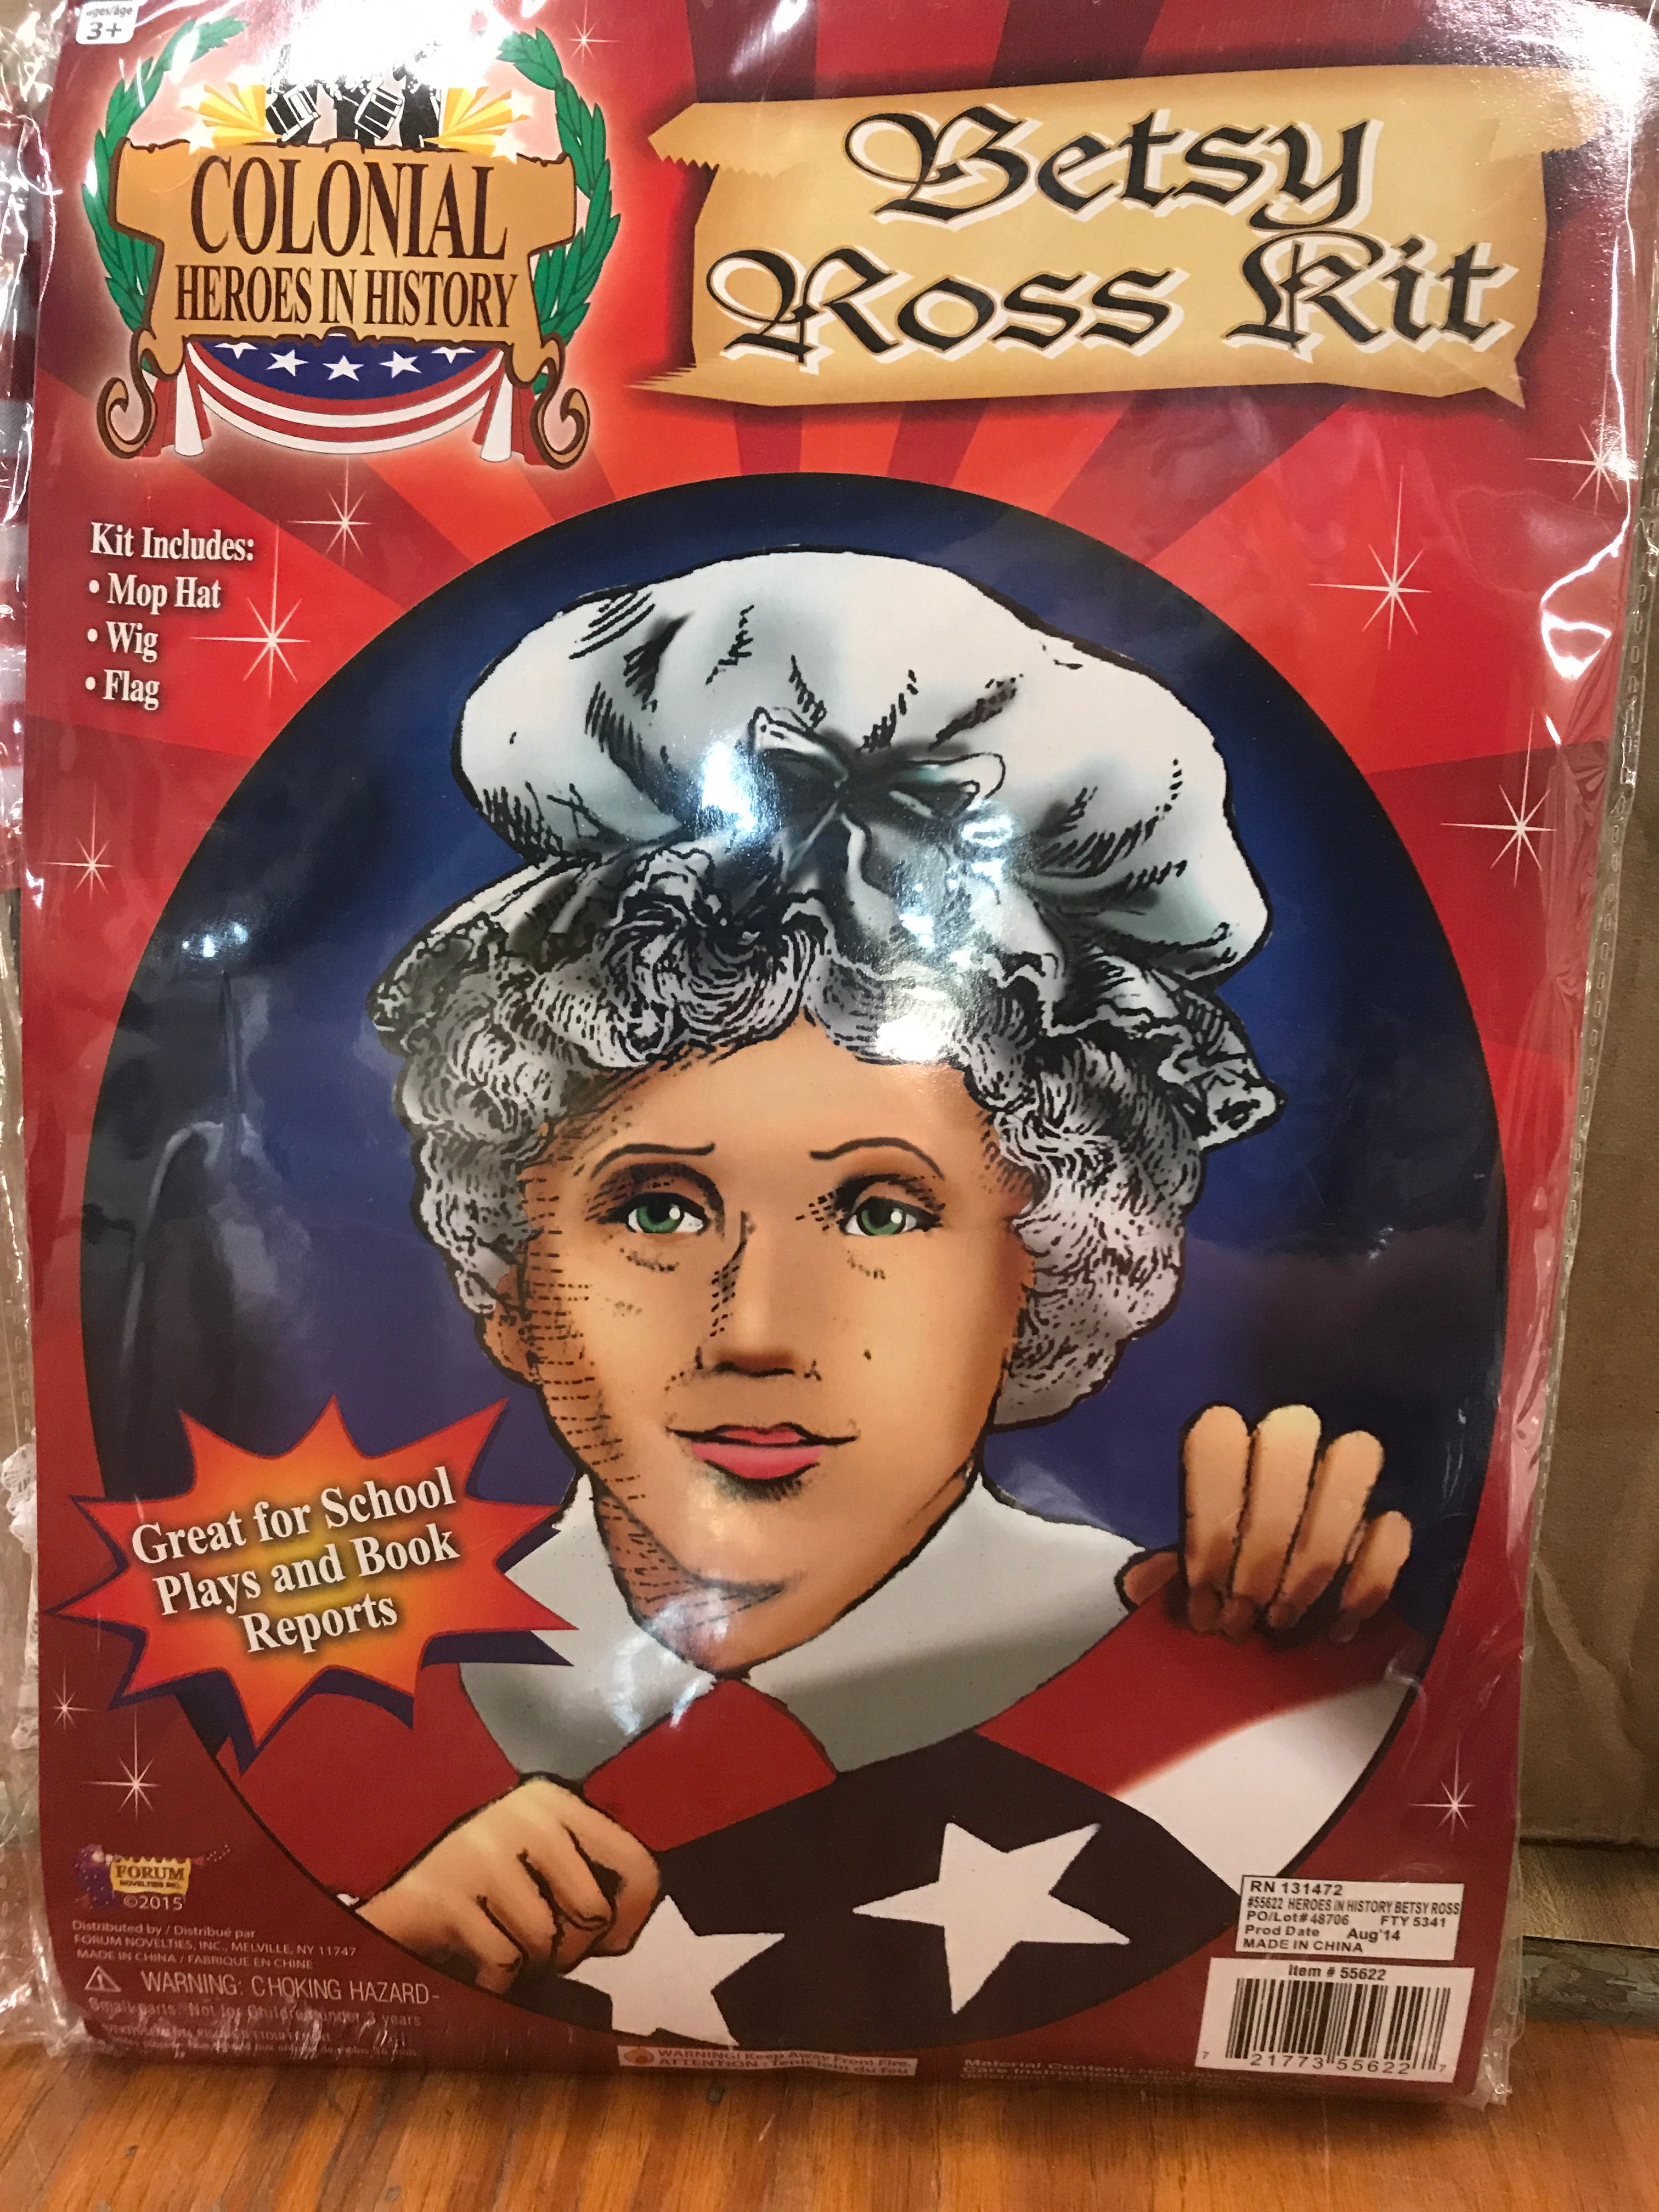 Betsy Ross kit